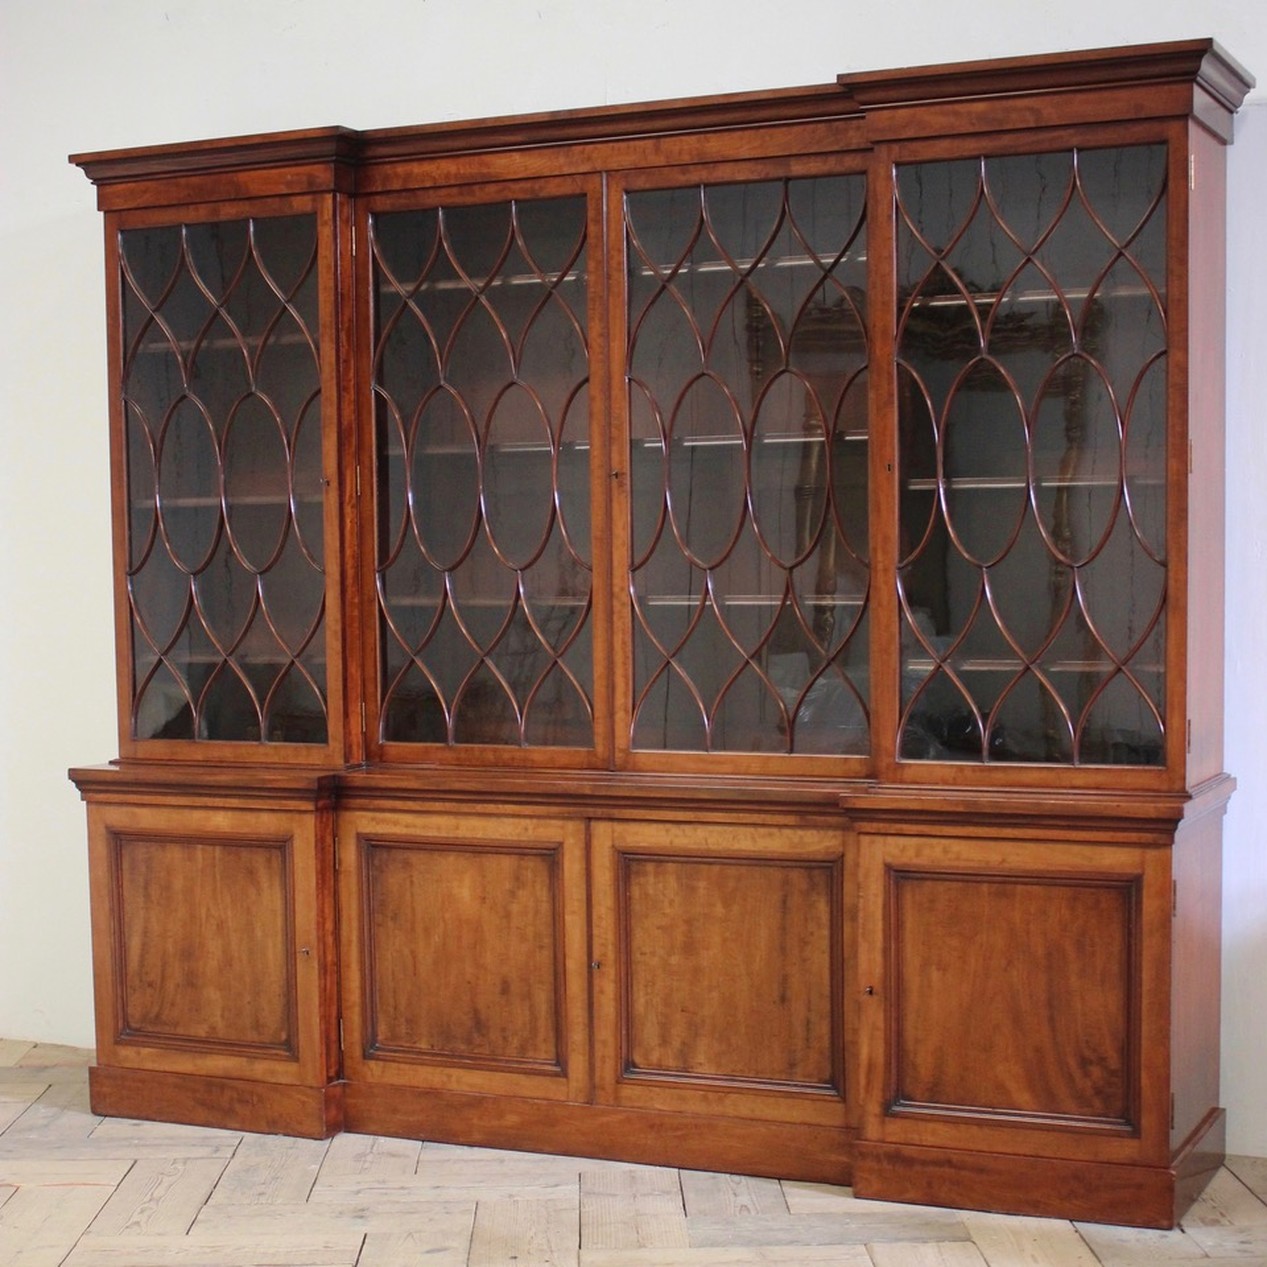 Brownrigg Interiors: Antiques Shop UK Selling Antique Furniture